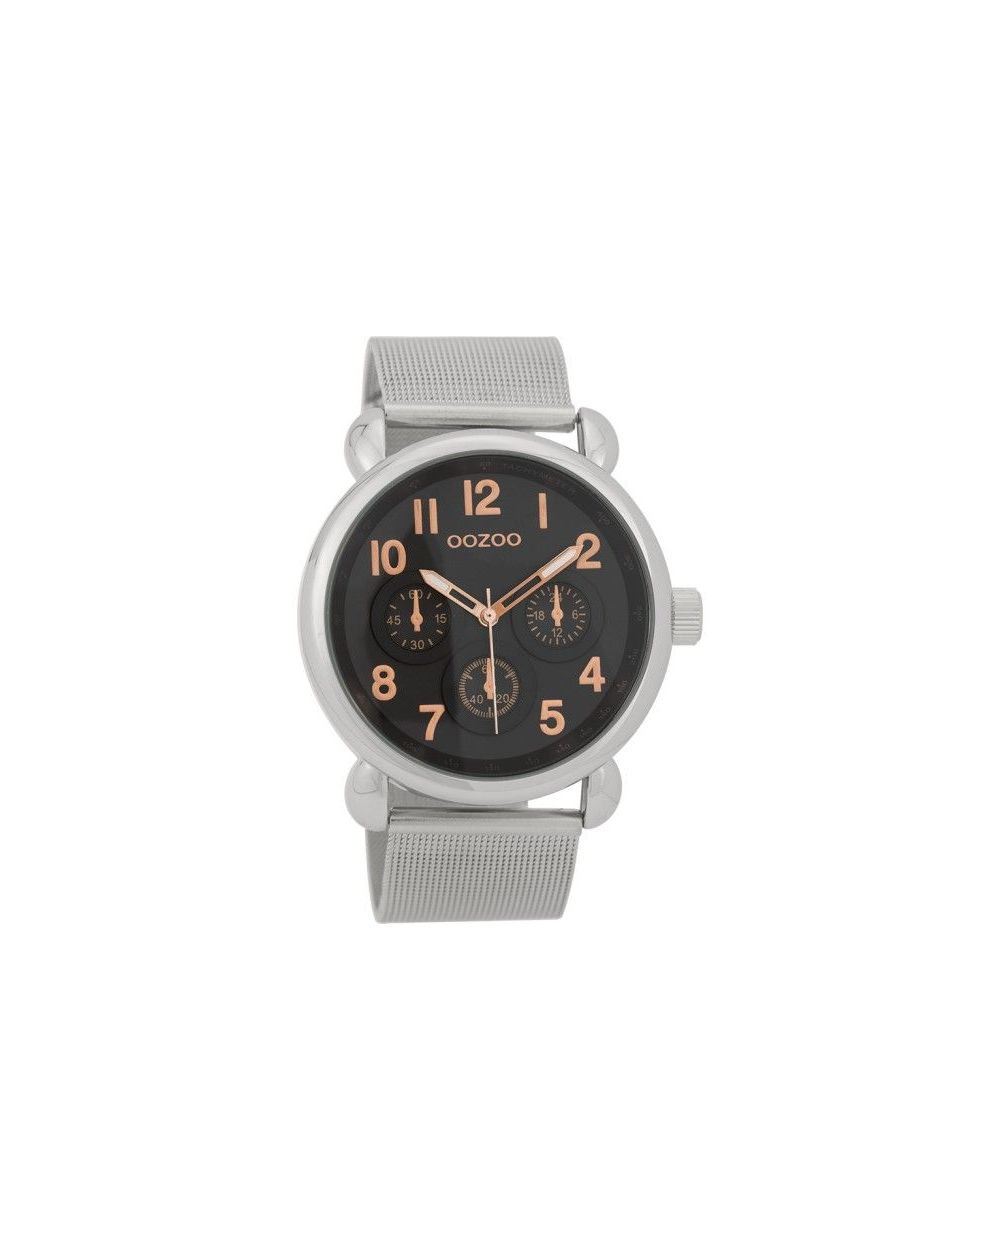 Montre Oozoo Timepieces C9614 silver/black - Marque Oozoo